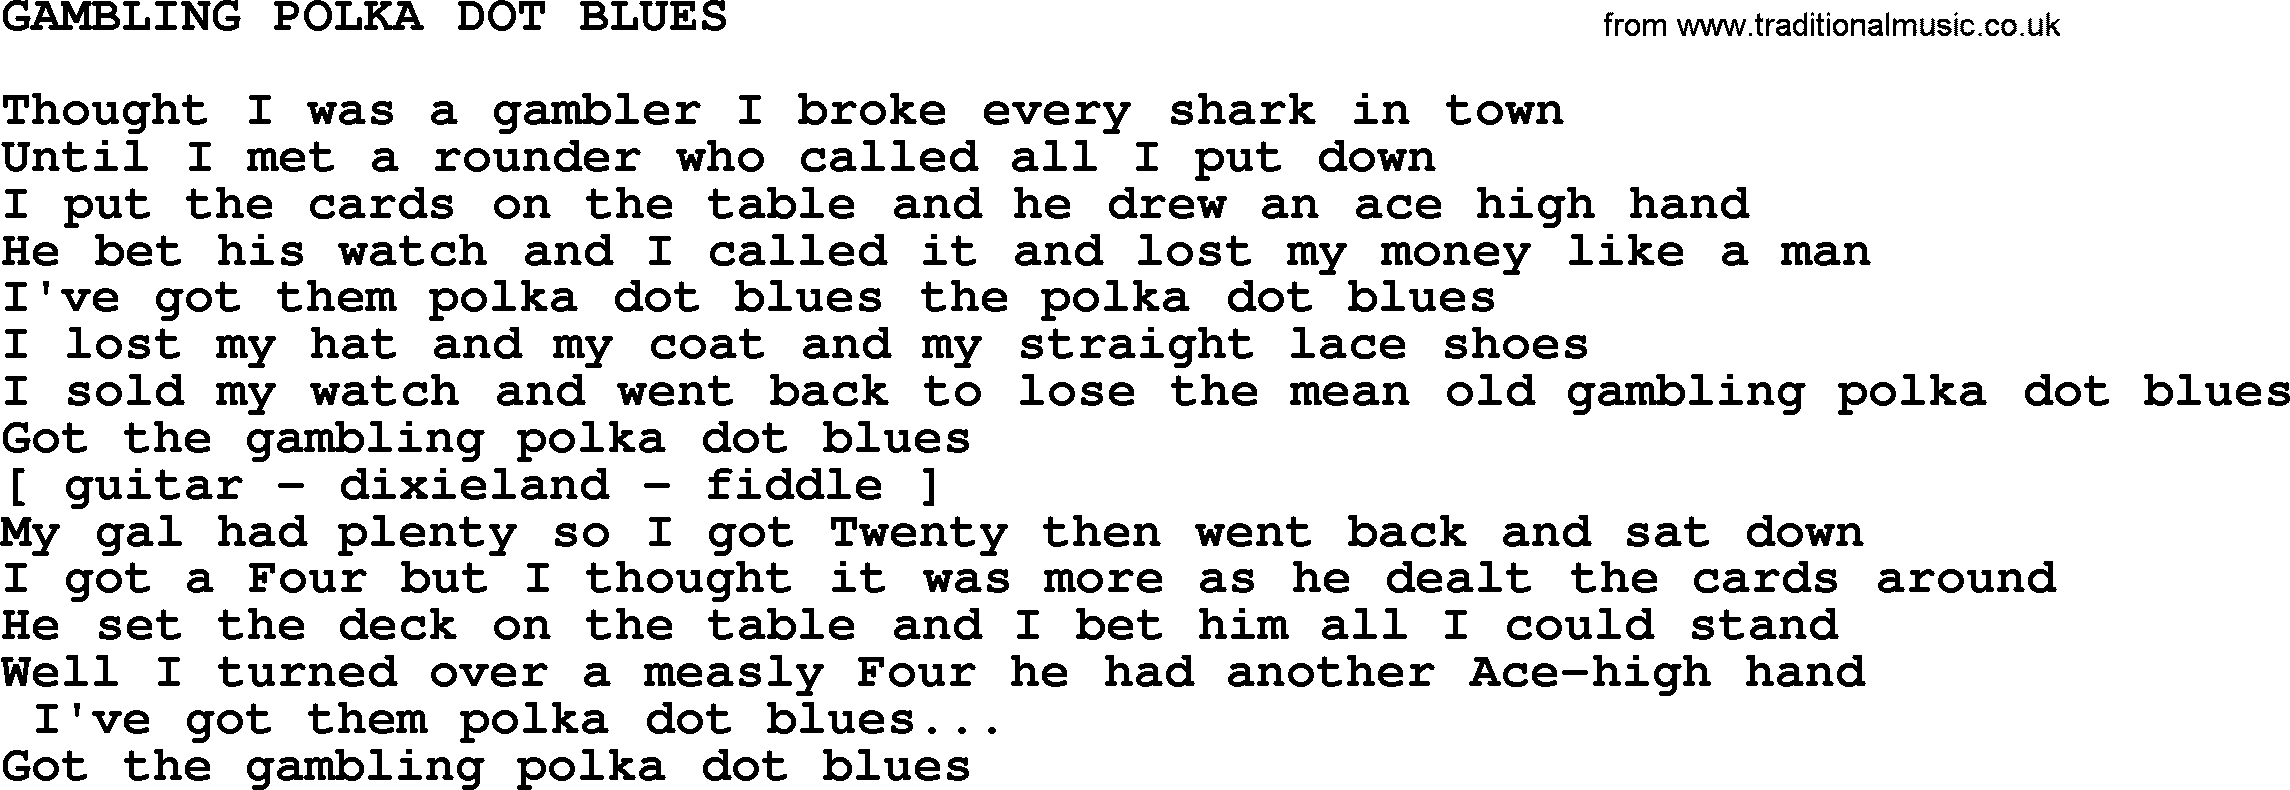 Merle Haggard song: Gambling Polka Dot Blues, lyrics.